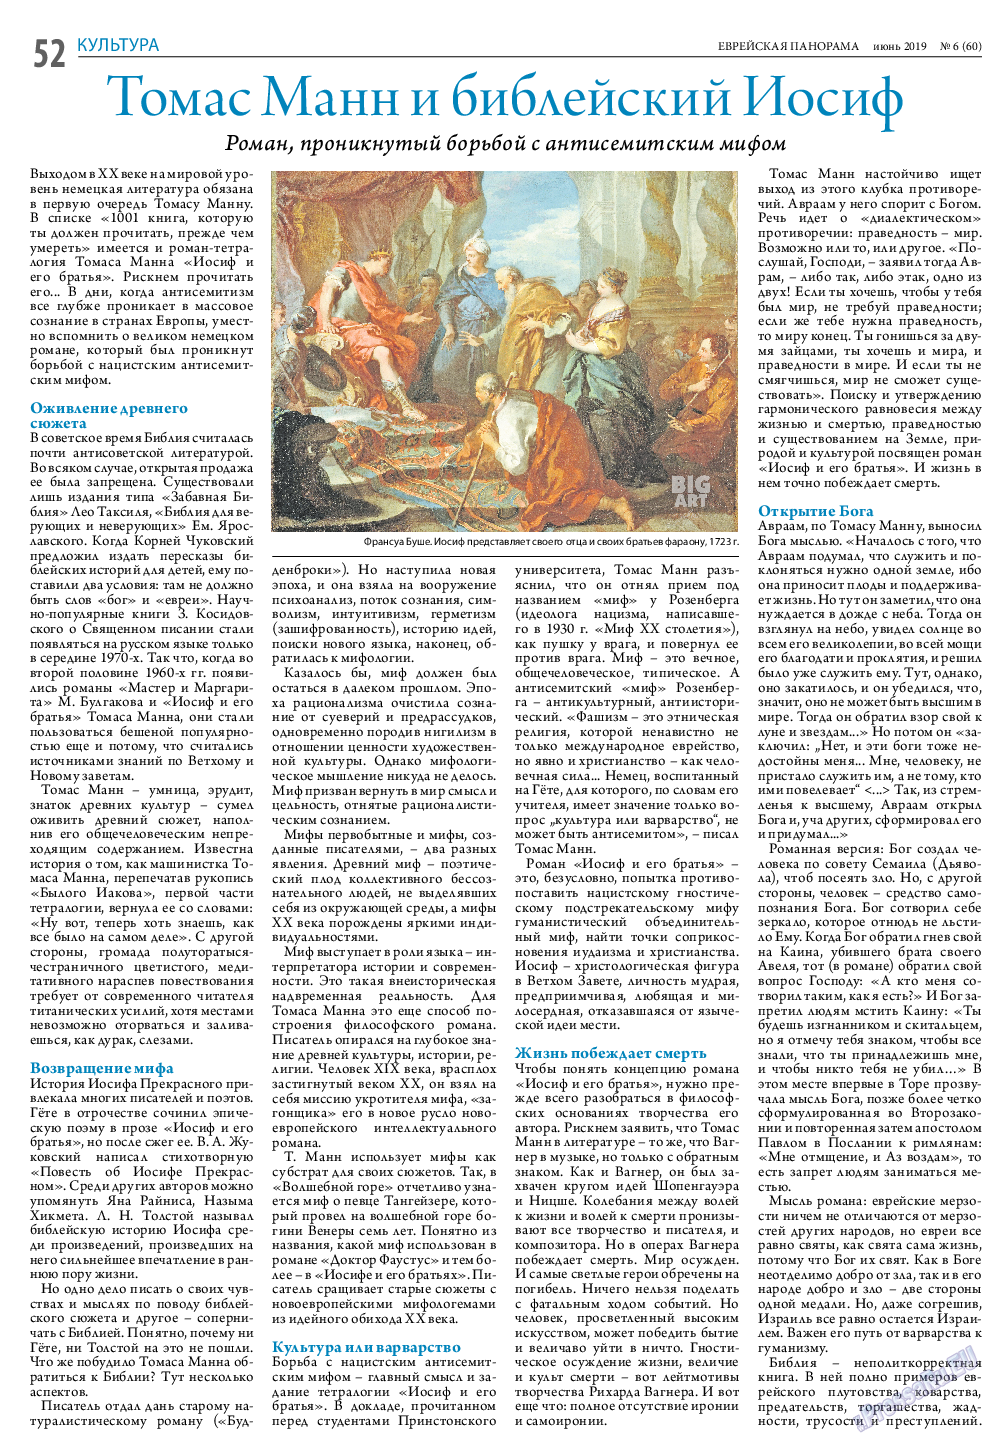 Еврейская панорама, газета. 2019 №6 стр.52